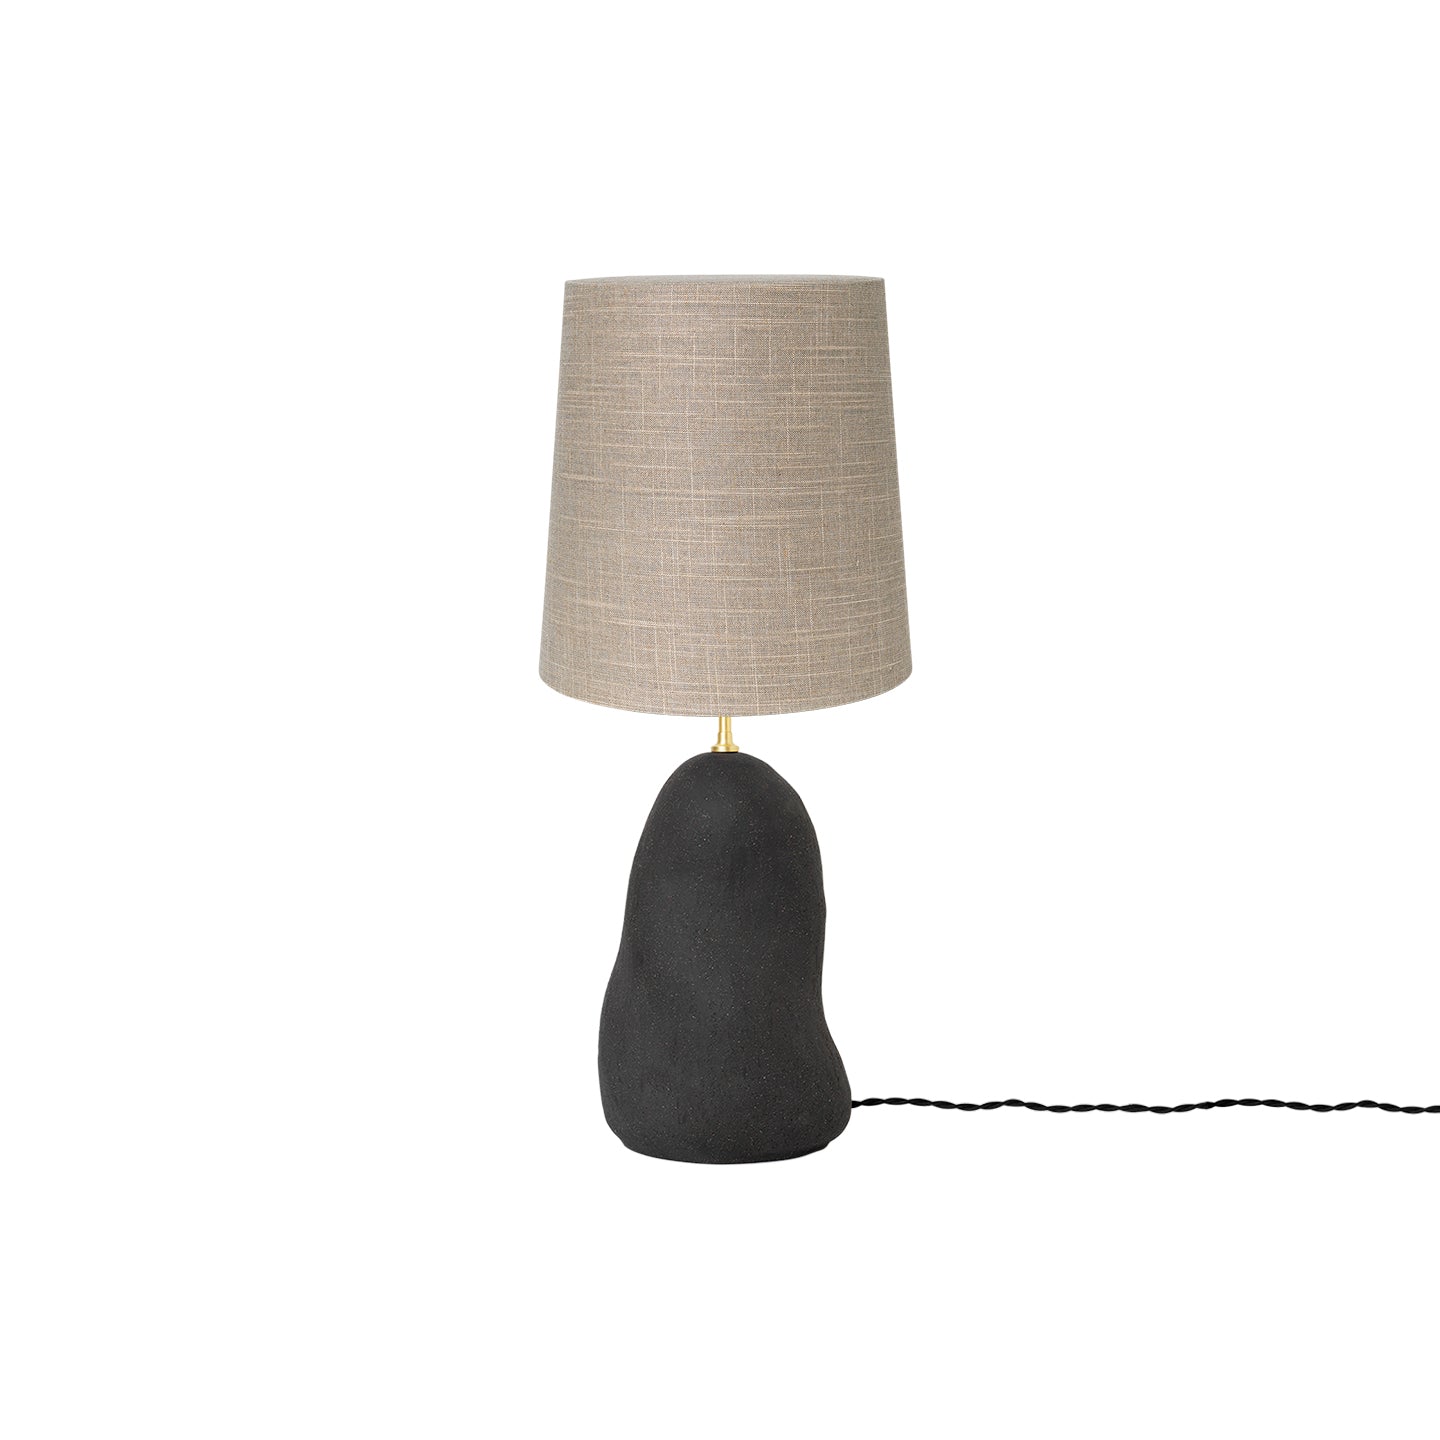 Hebe Lamp: Medium + Sand + Black